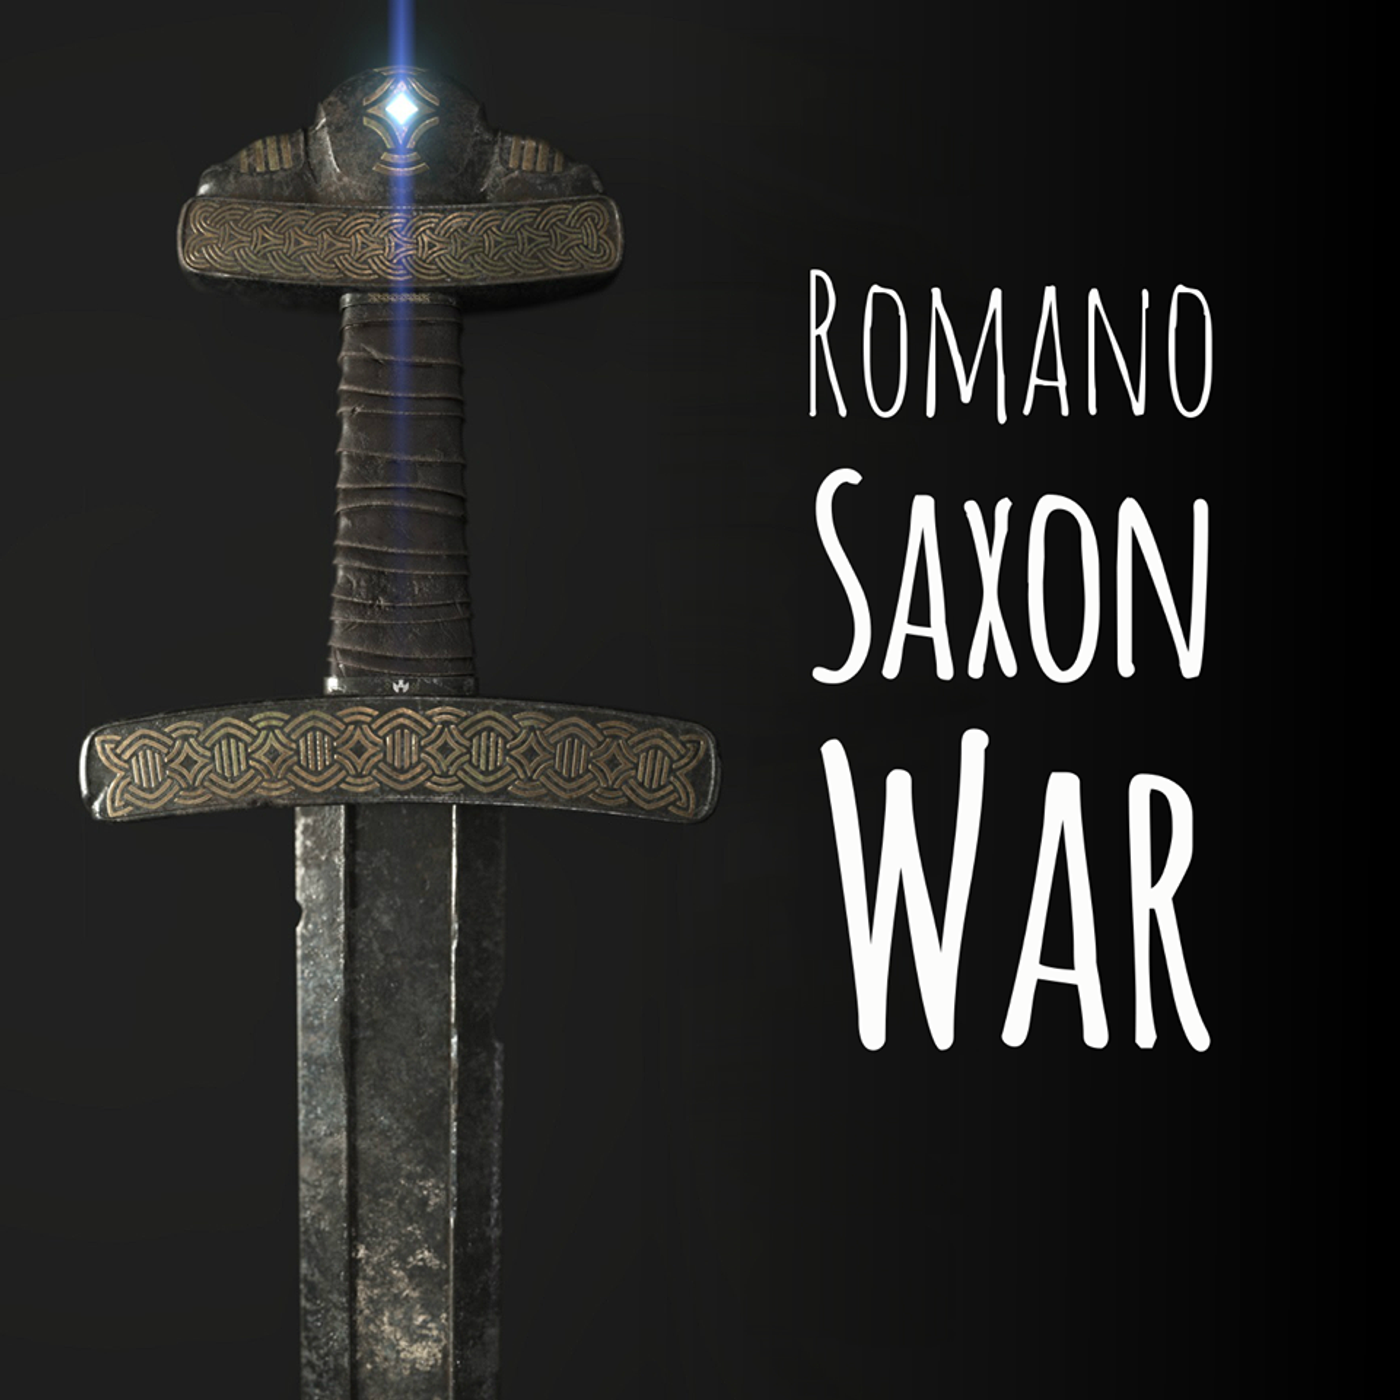 Romano Saxon War, Part 13